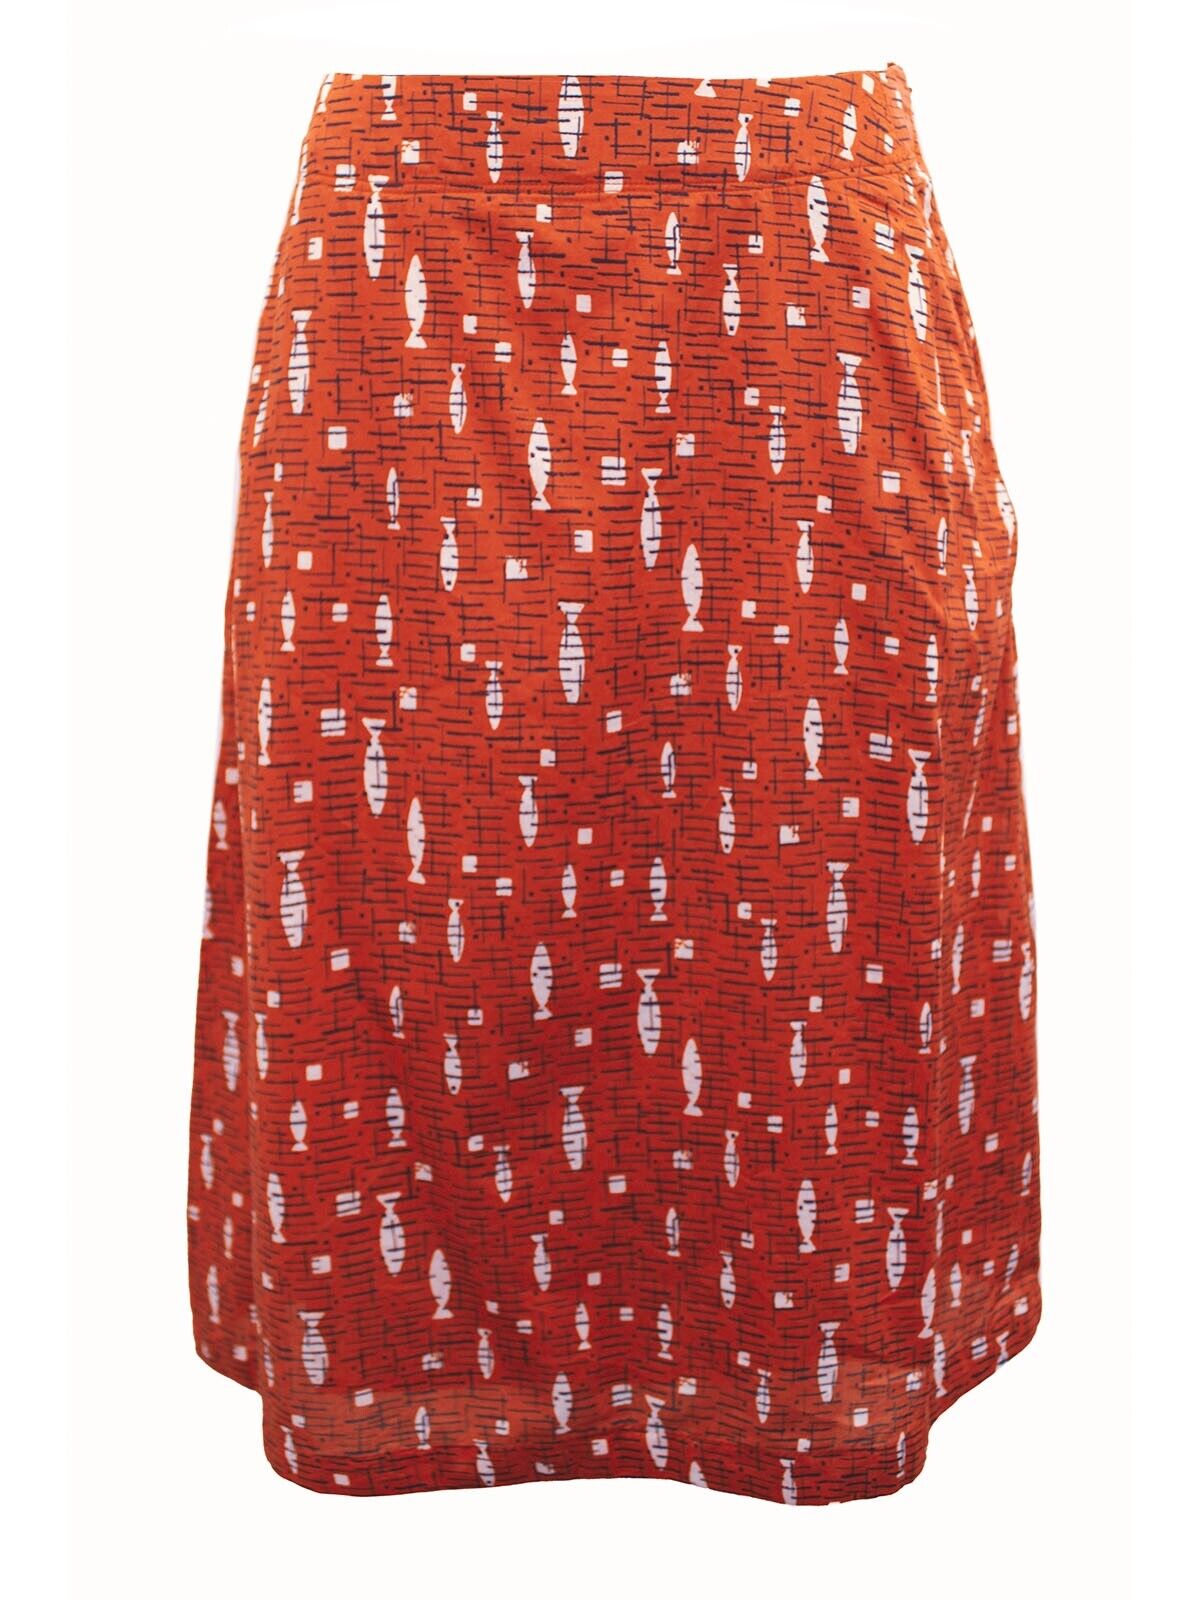 EX Seasalt Brick Red Paint Pot Skirt in Size 24 see description for measurements